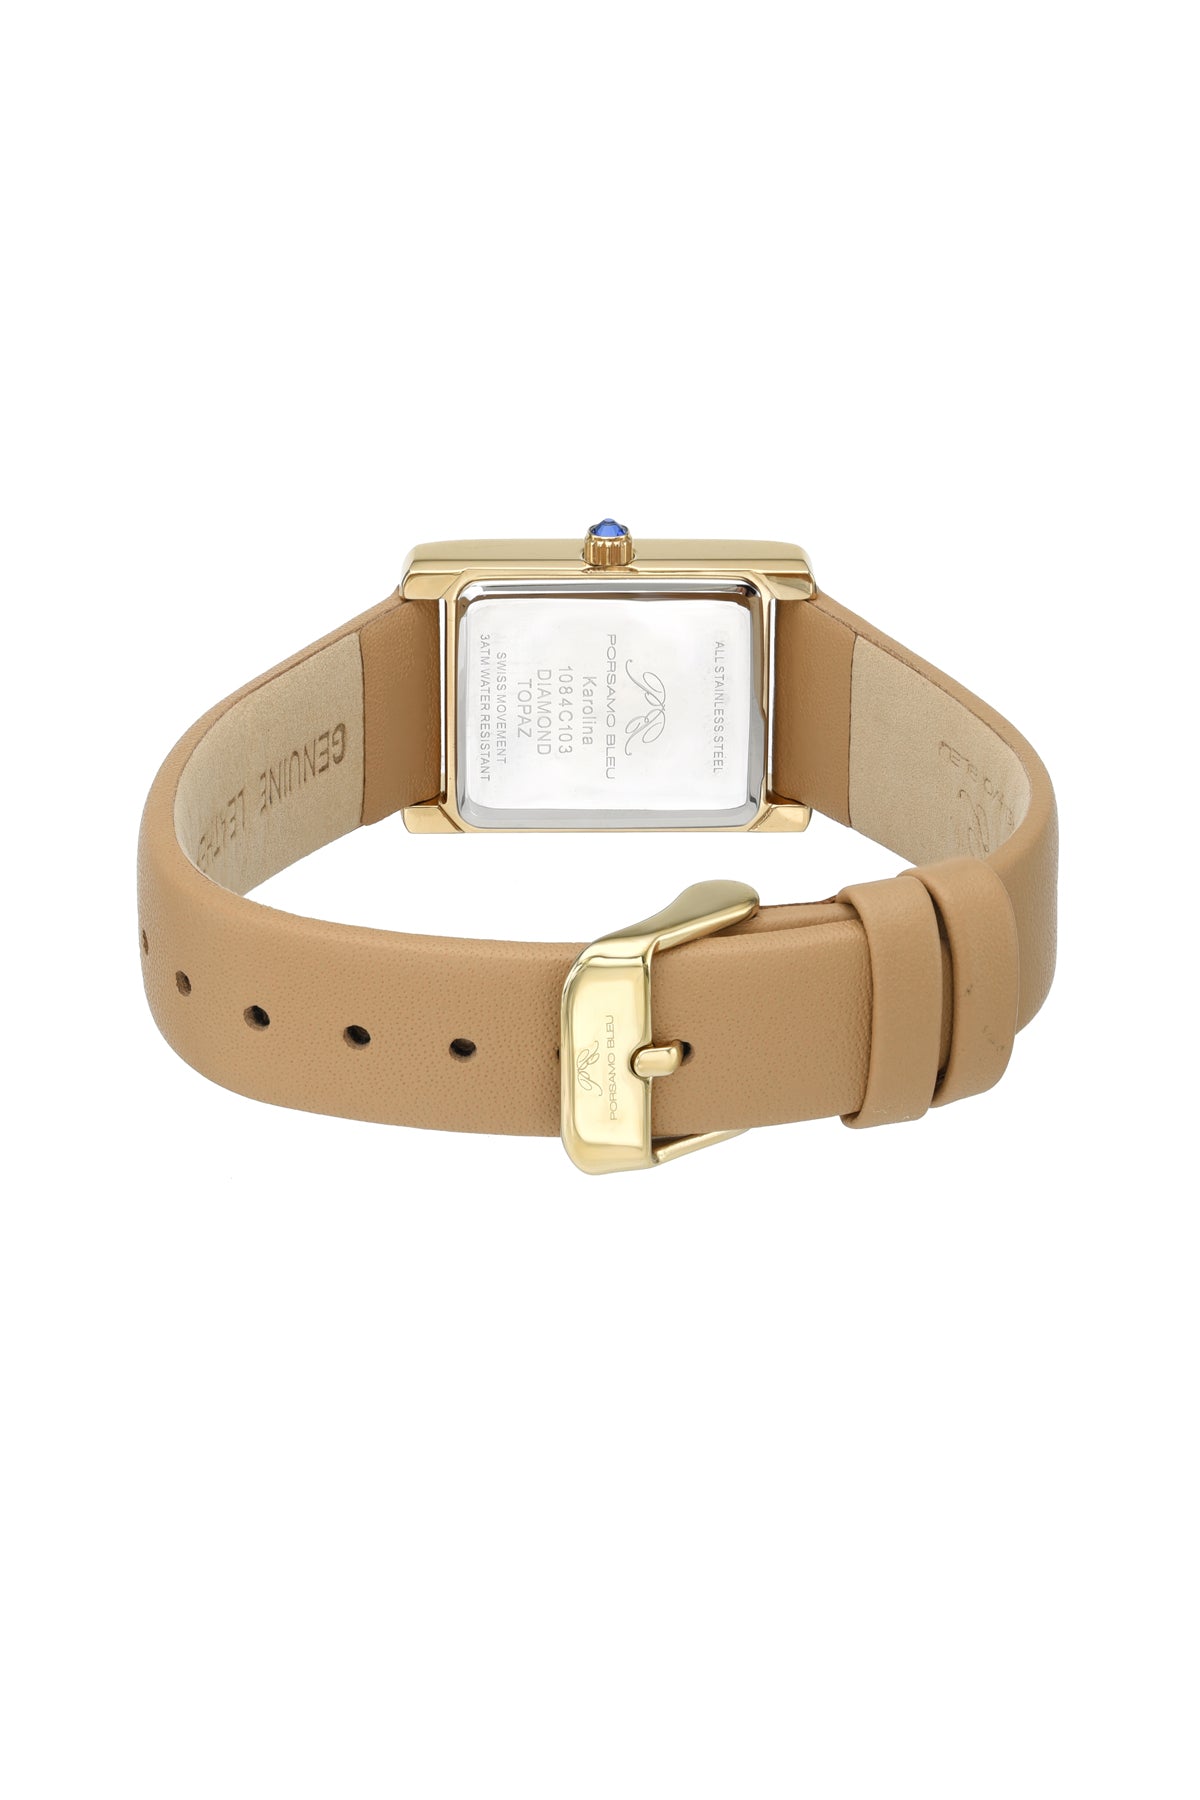 Porsamo Bleu Karolina luxury diamond topaz rectangular women's genuine leather band watch, gold, cognac 1084CKAL